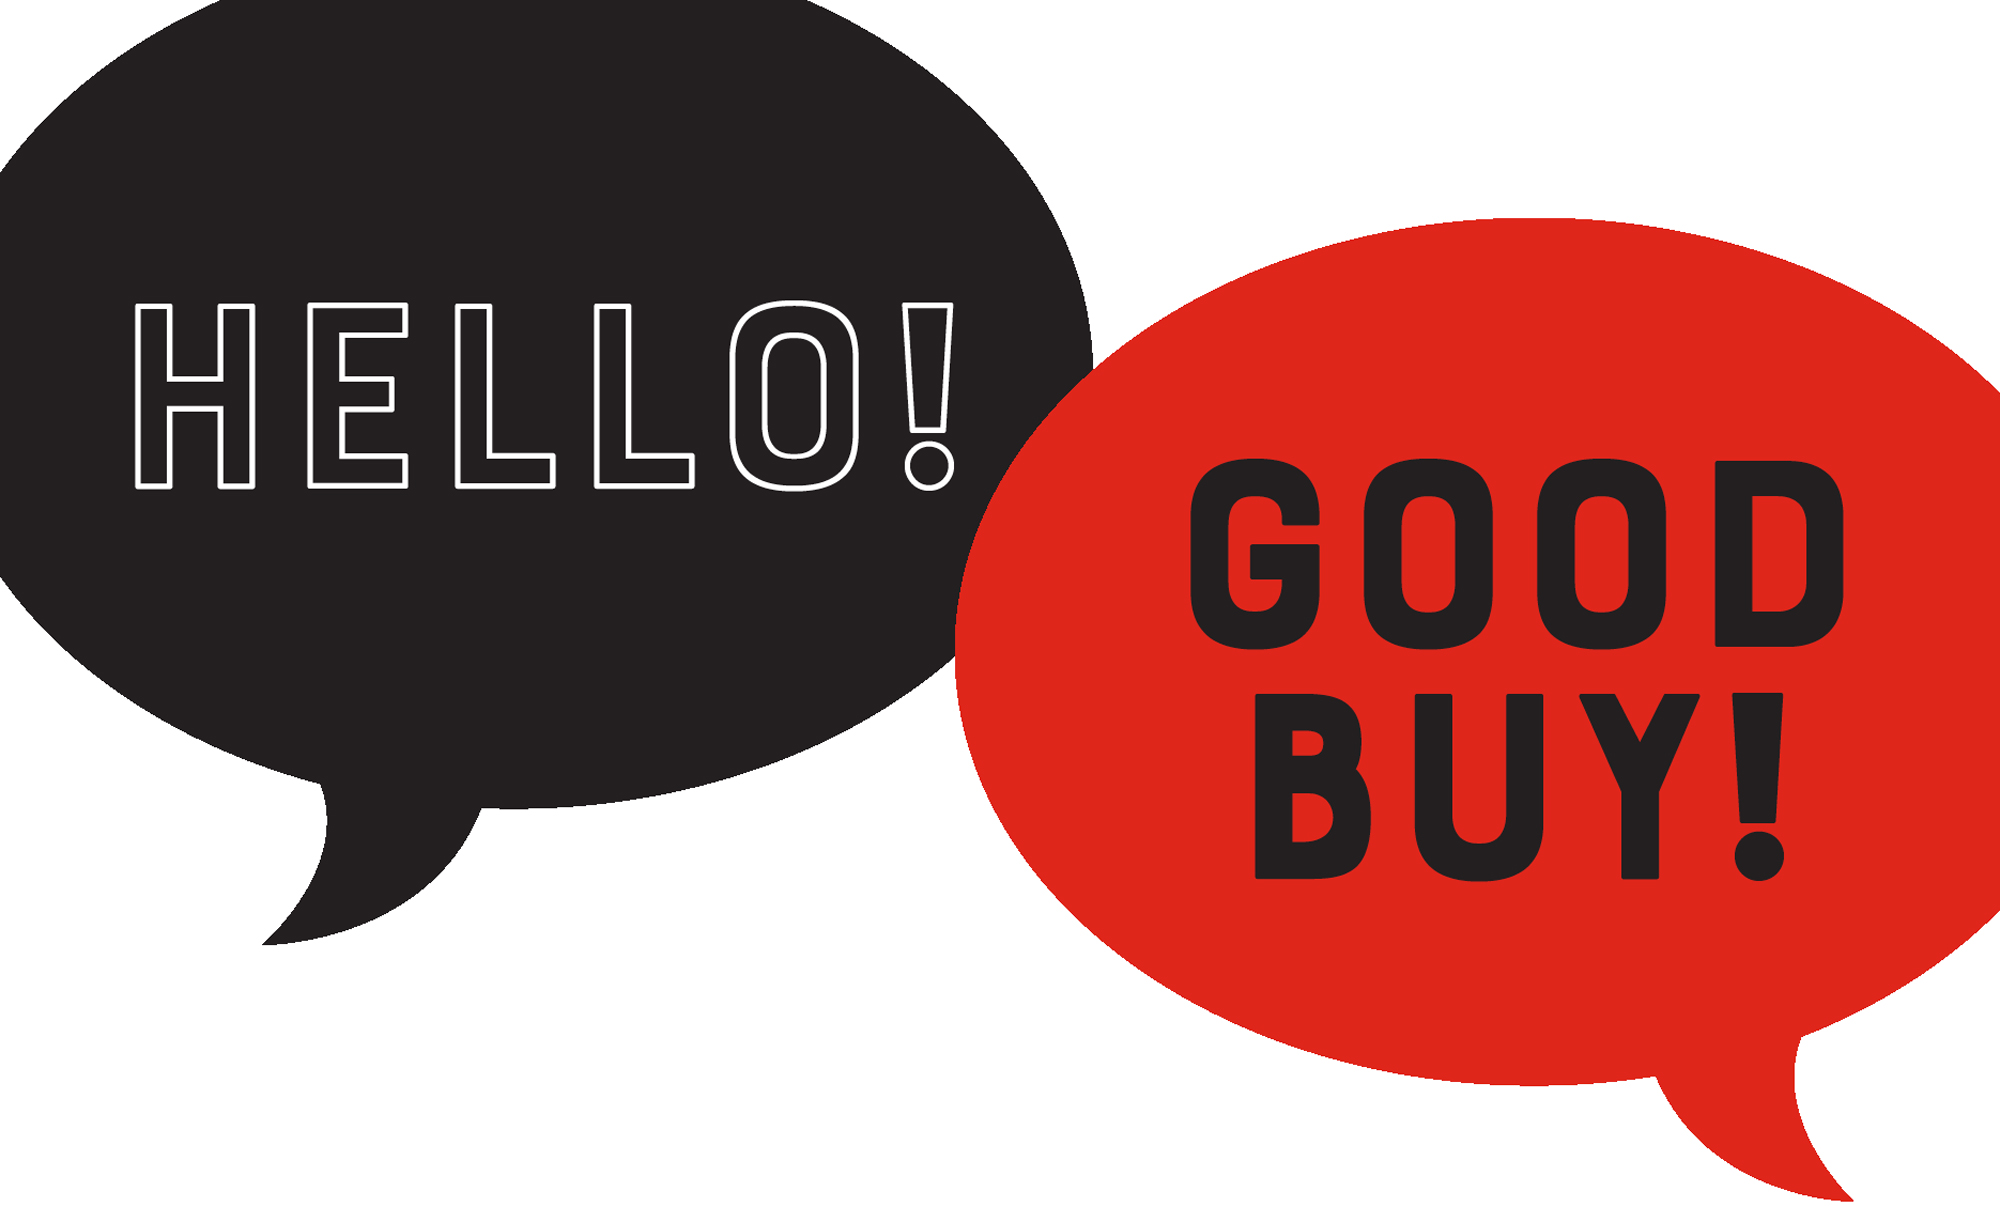 black speech bubble reading 'Hello' and red speech bubble reading 'Good Buy!'